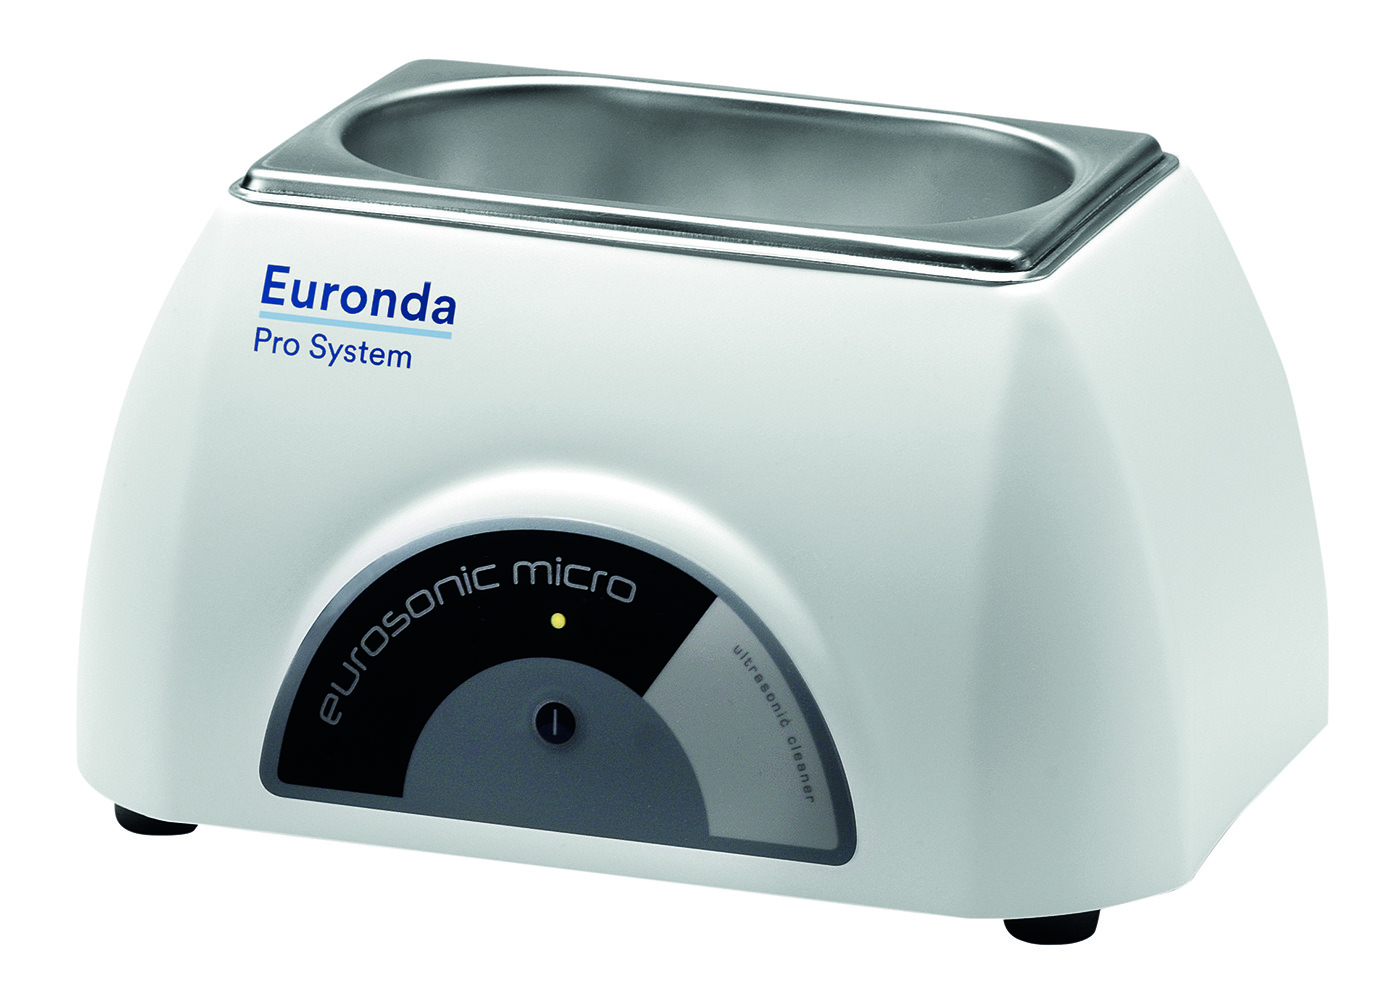 Eurosonic Micro Euronda